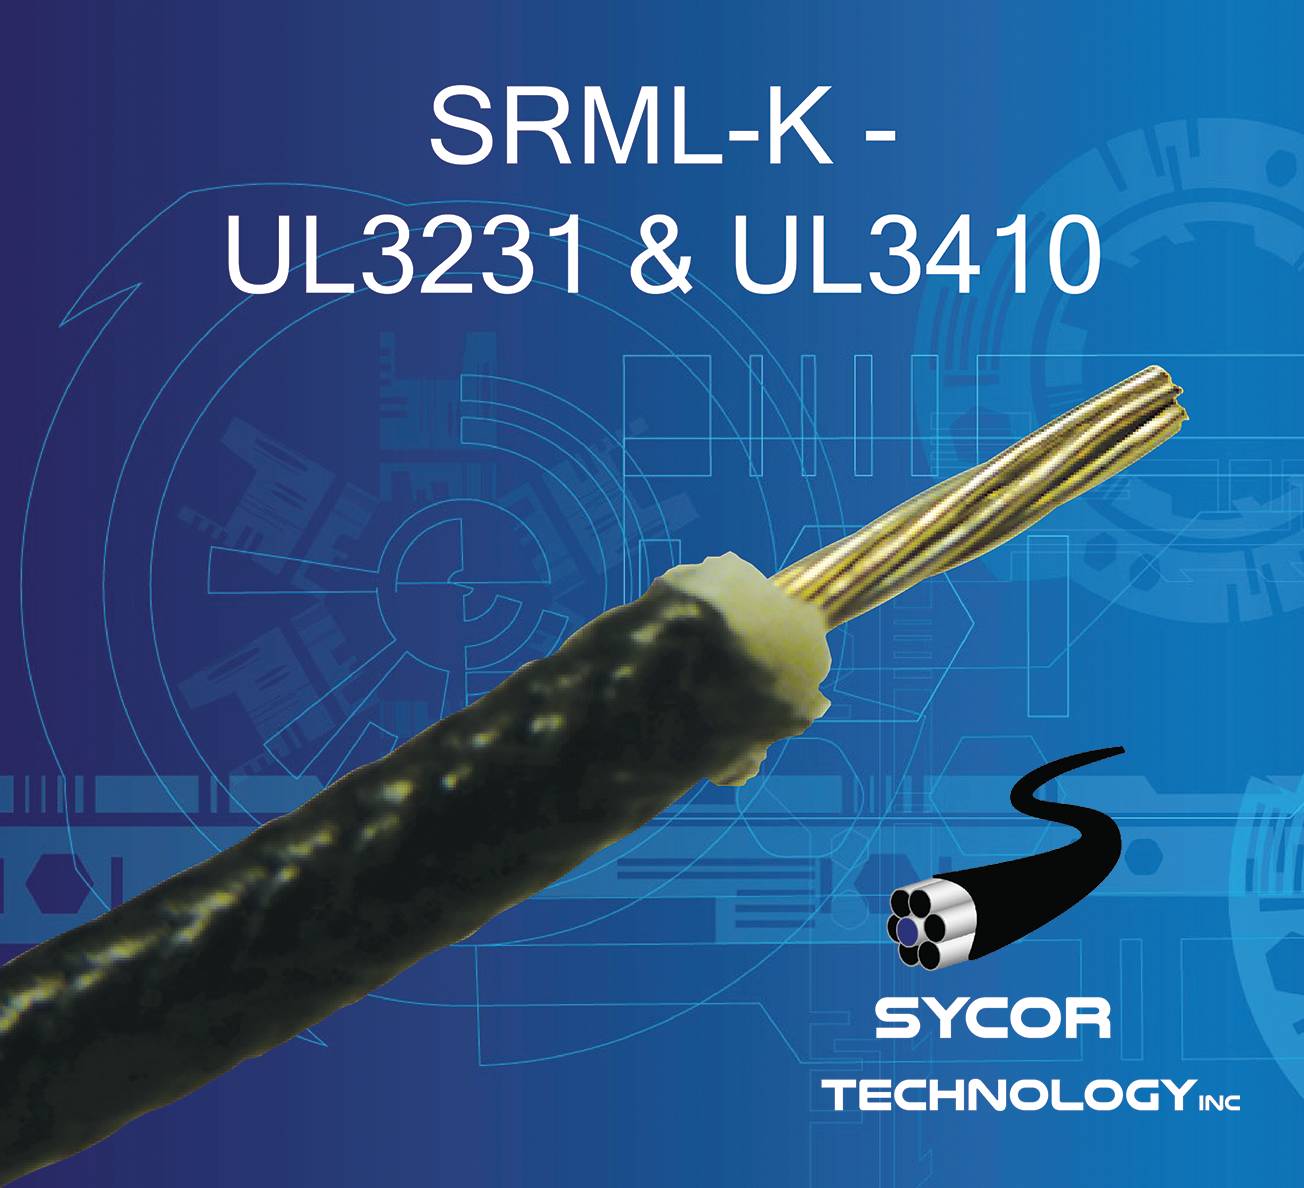 SRML-K - UL3231, UL3410 High-Temperature Wire